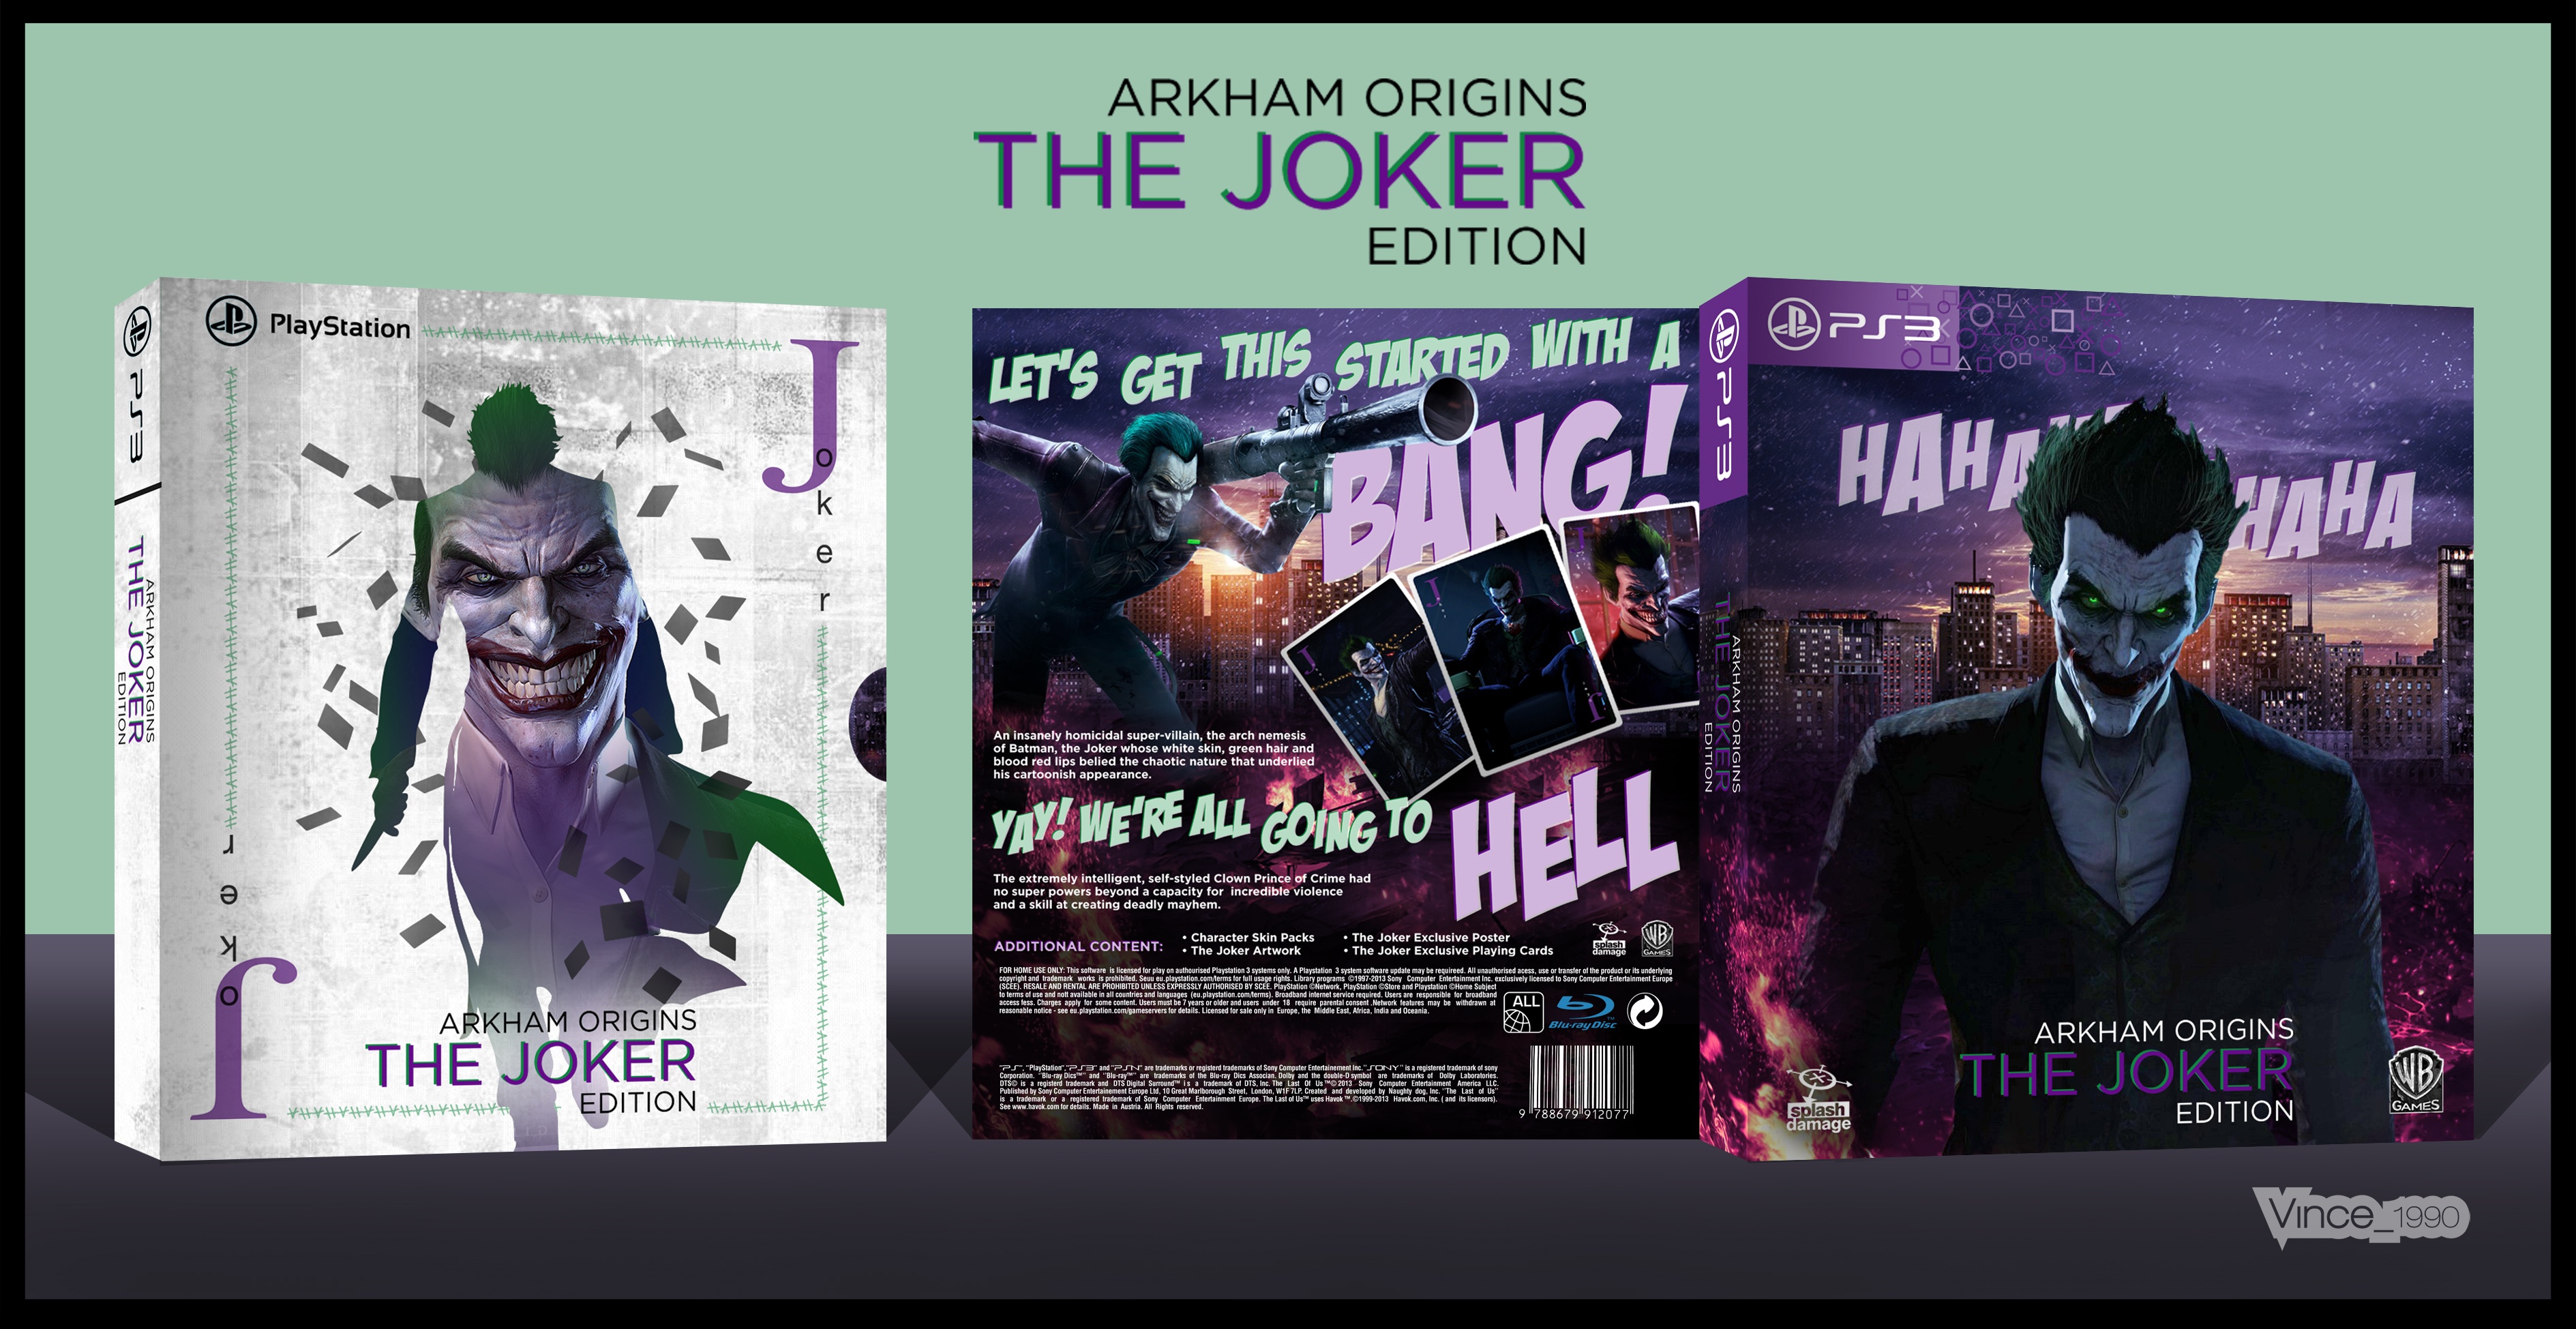 Batman: Arkham Origins - The Joker Edition box cover